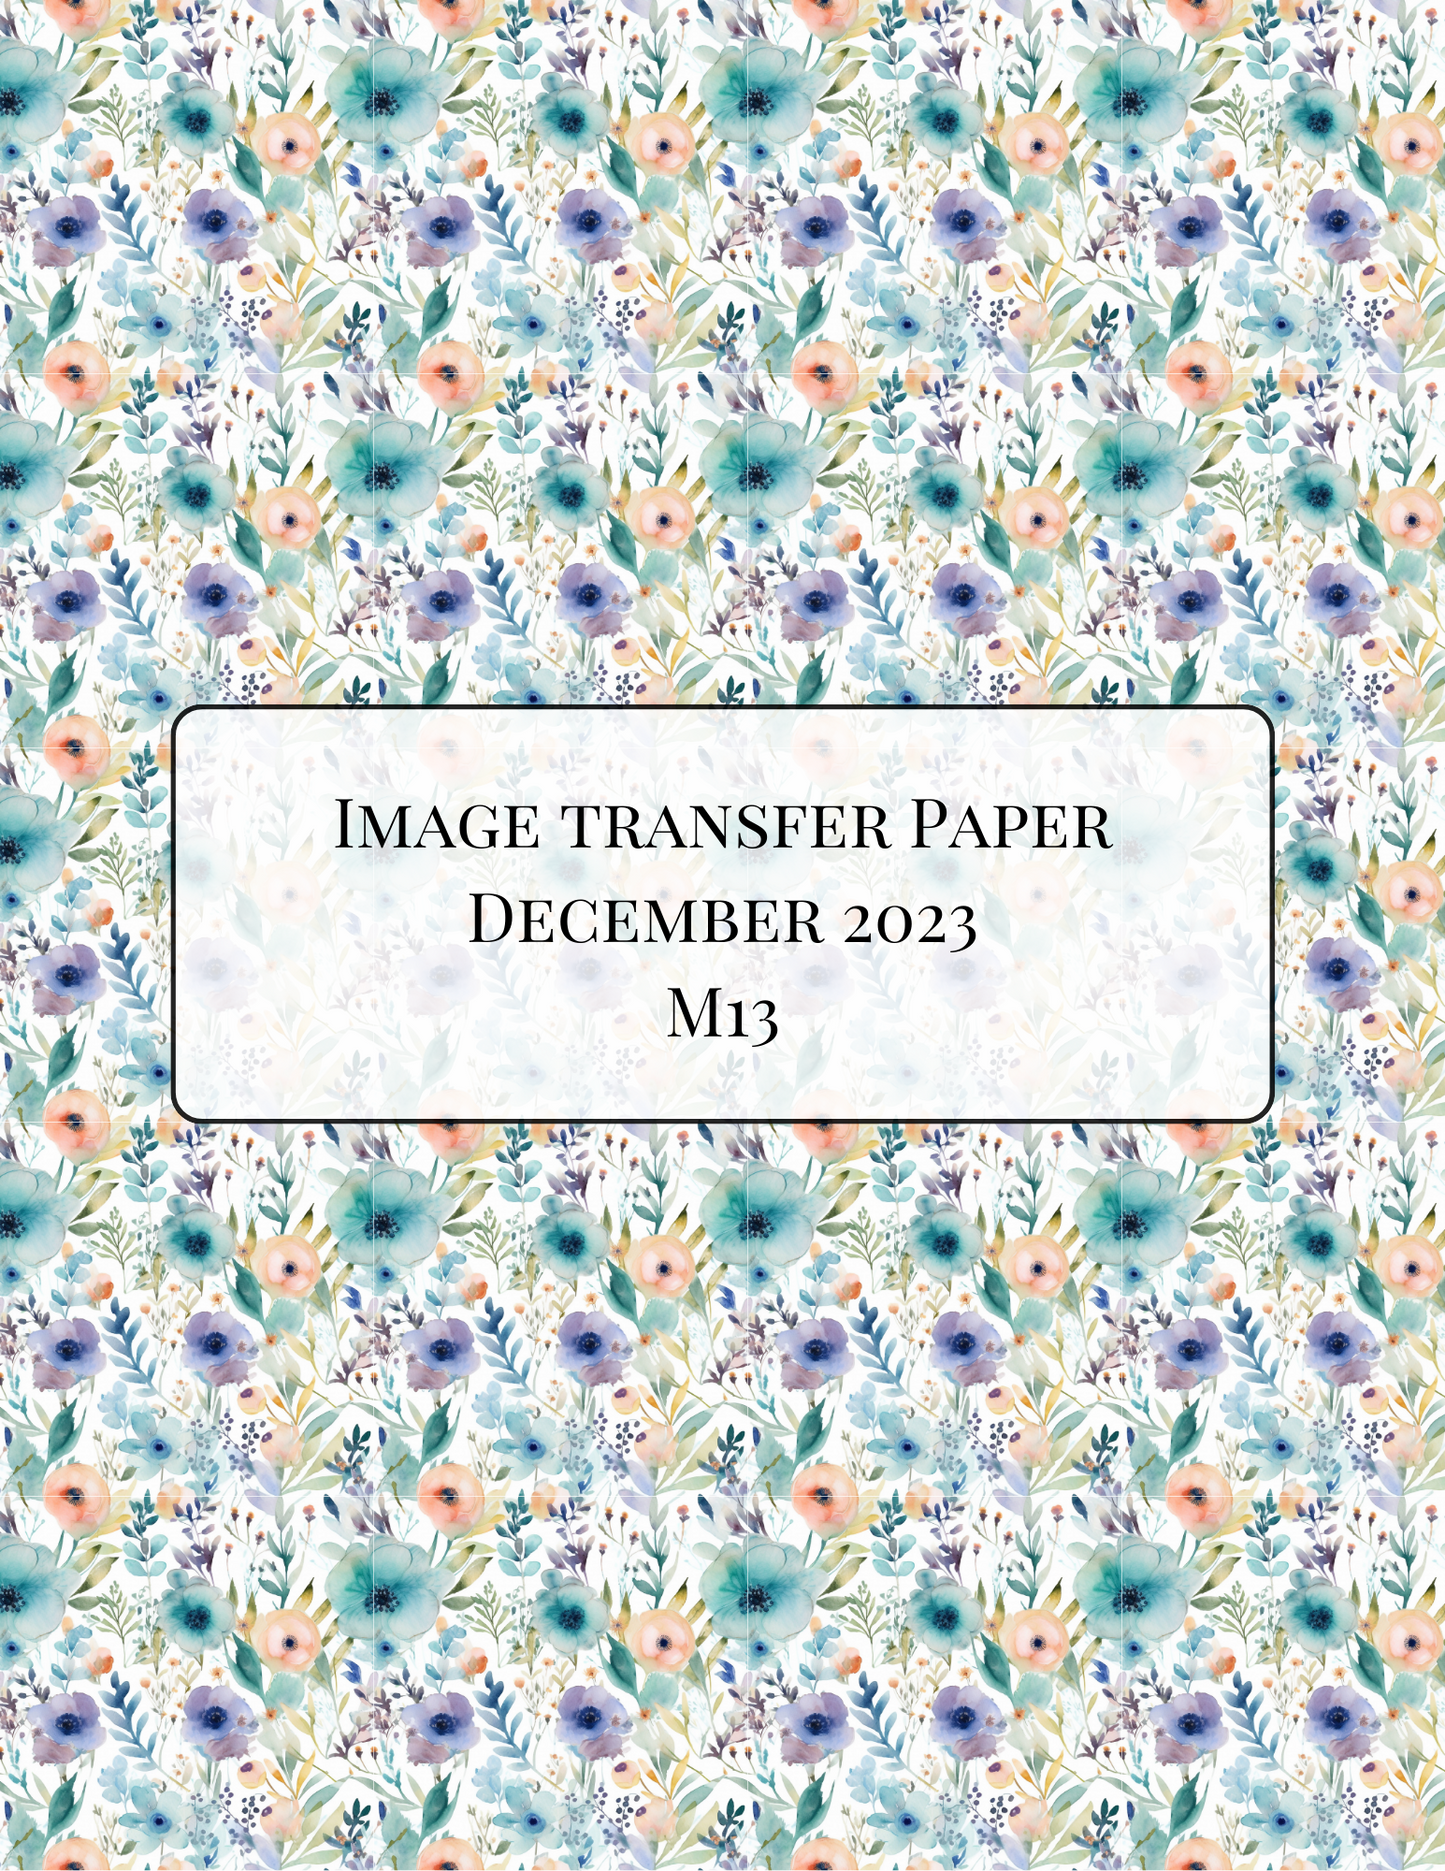 M13 Transfer Paper - December 2023 Launch